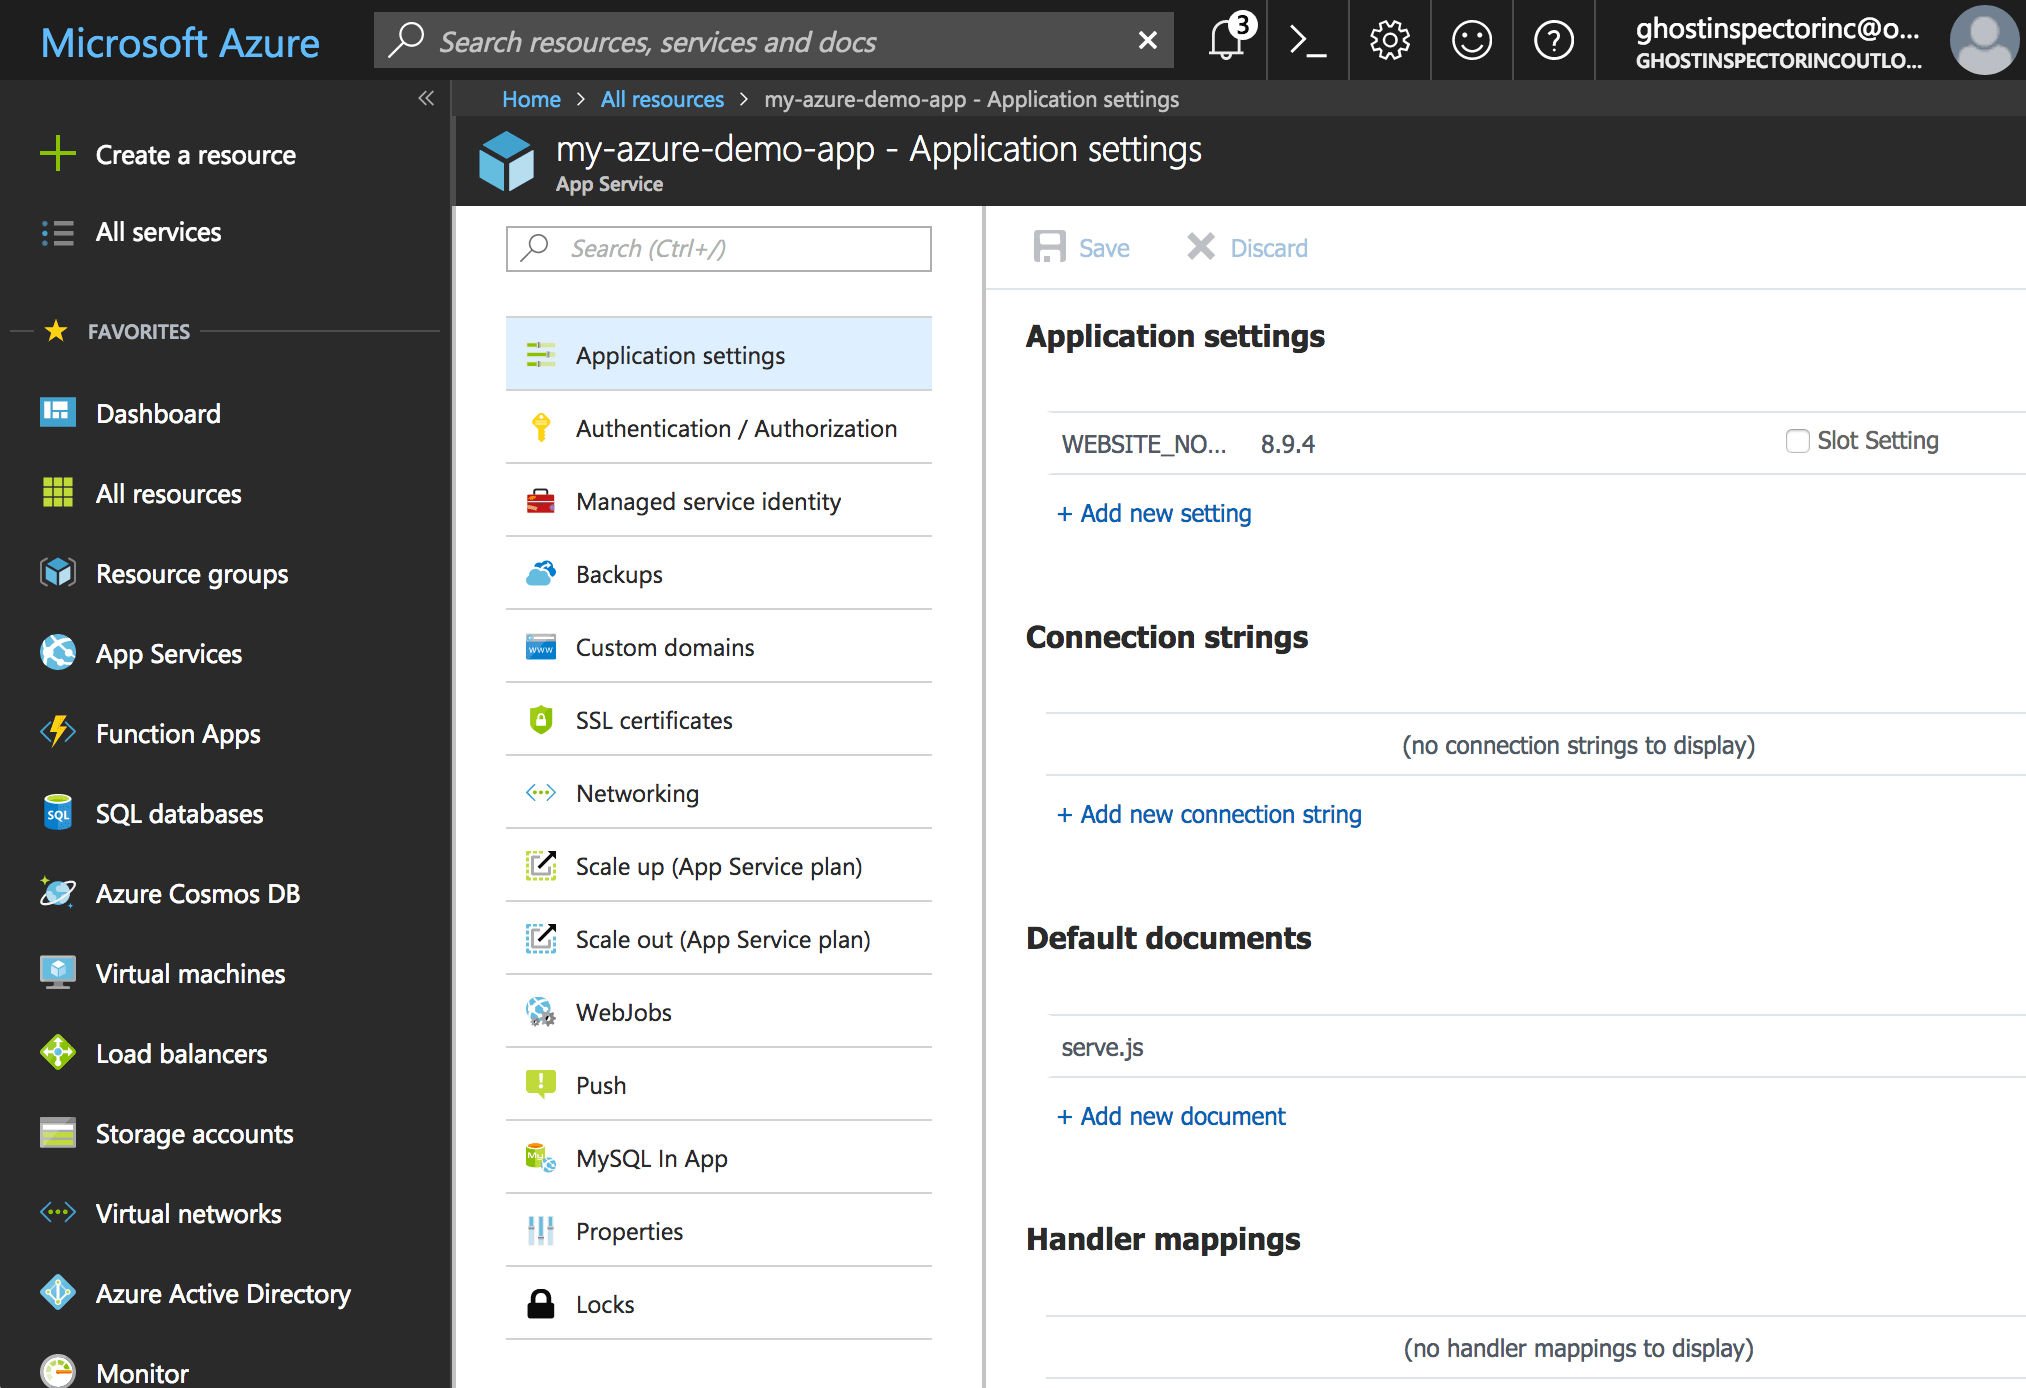 Configure our default document in Azure